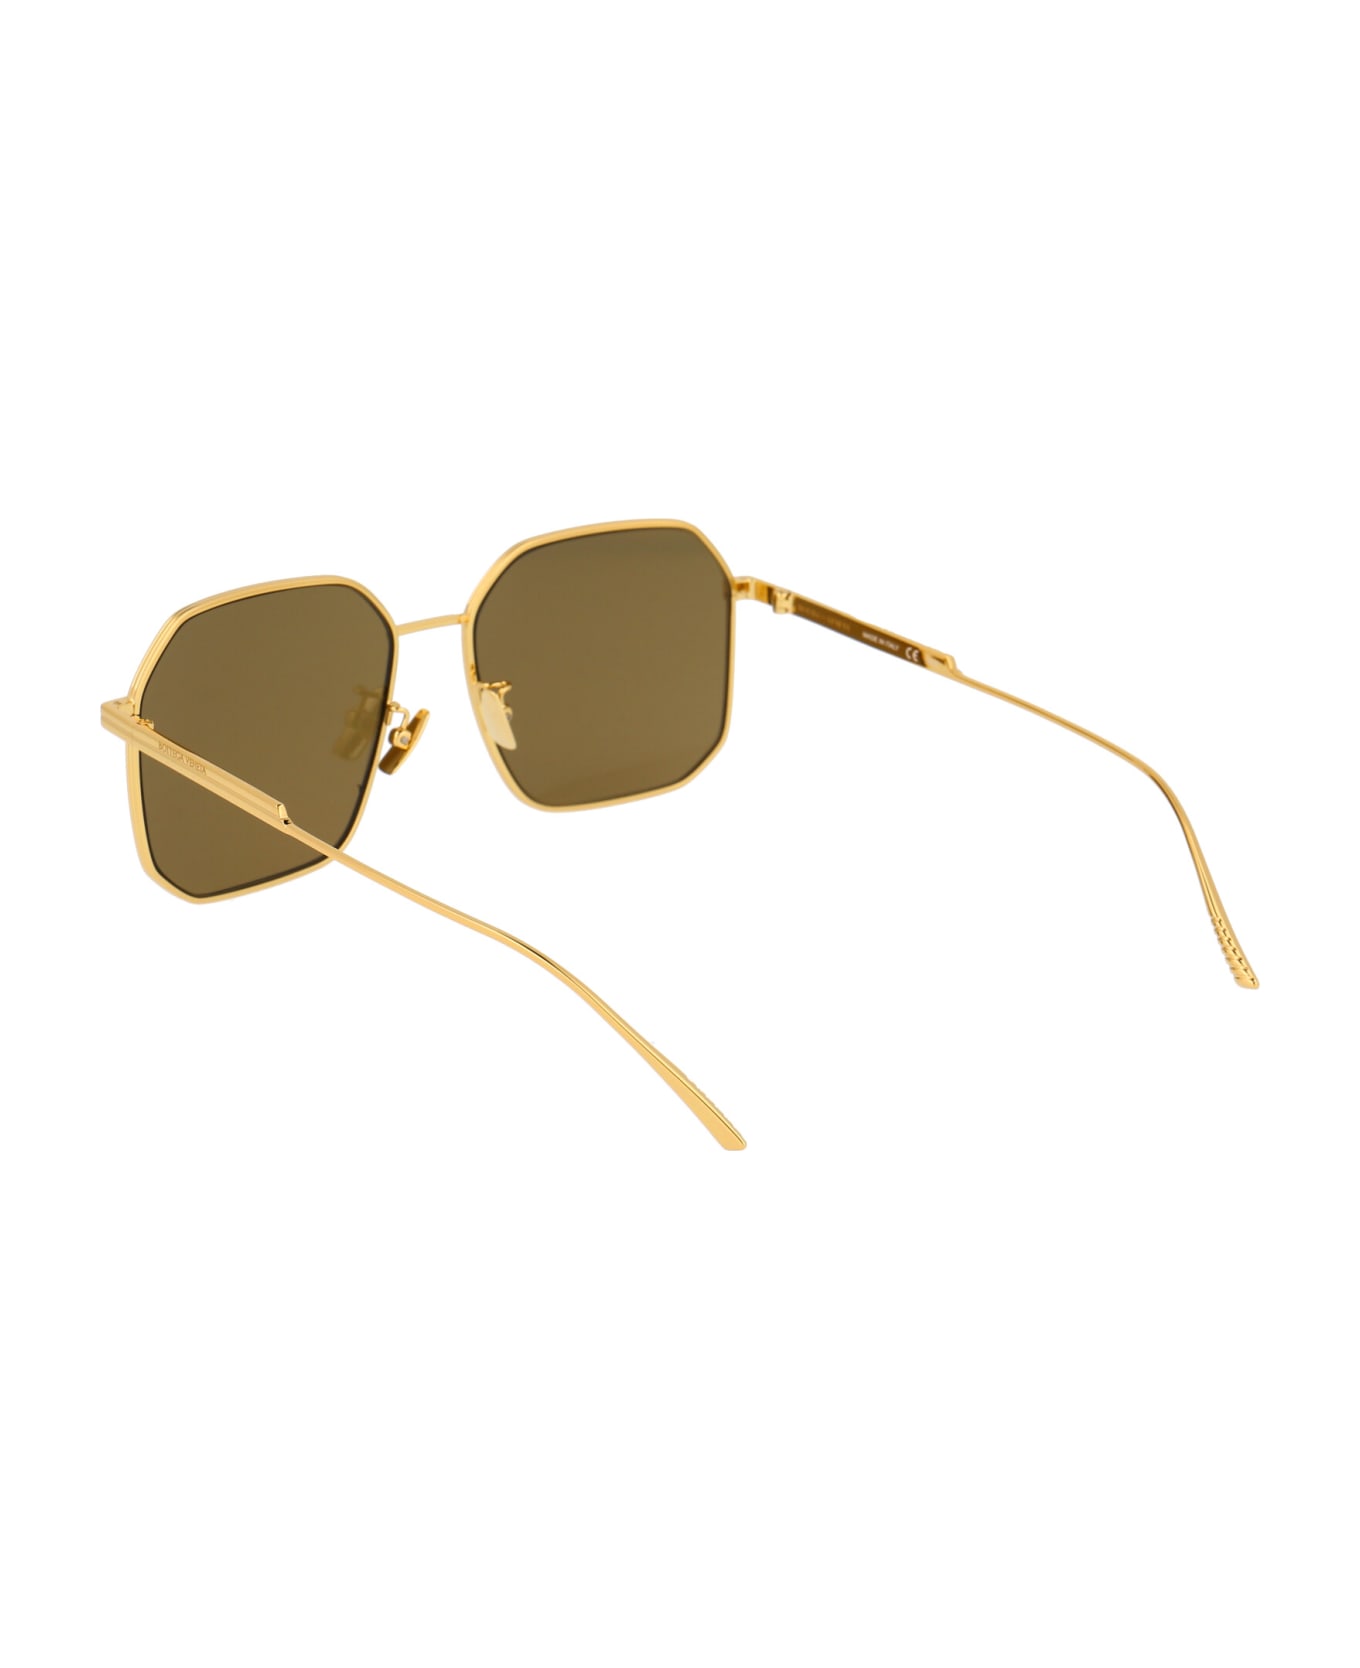 Bottega Veneta Eyewear Bv1108sa Sunglasses - 002 GOLD GOLD BROWN サングラス